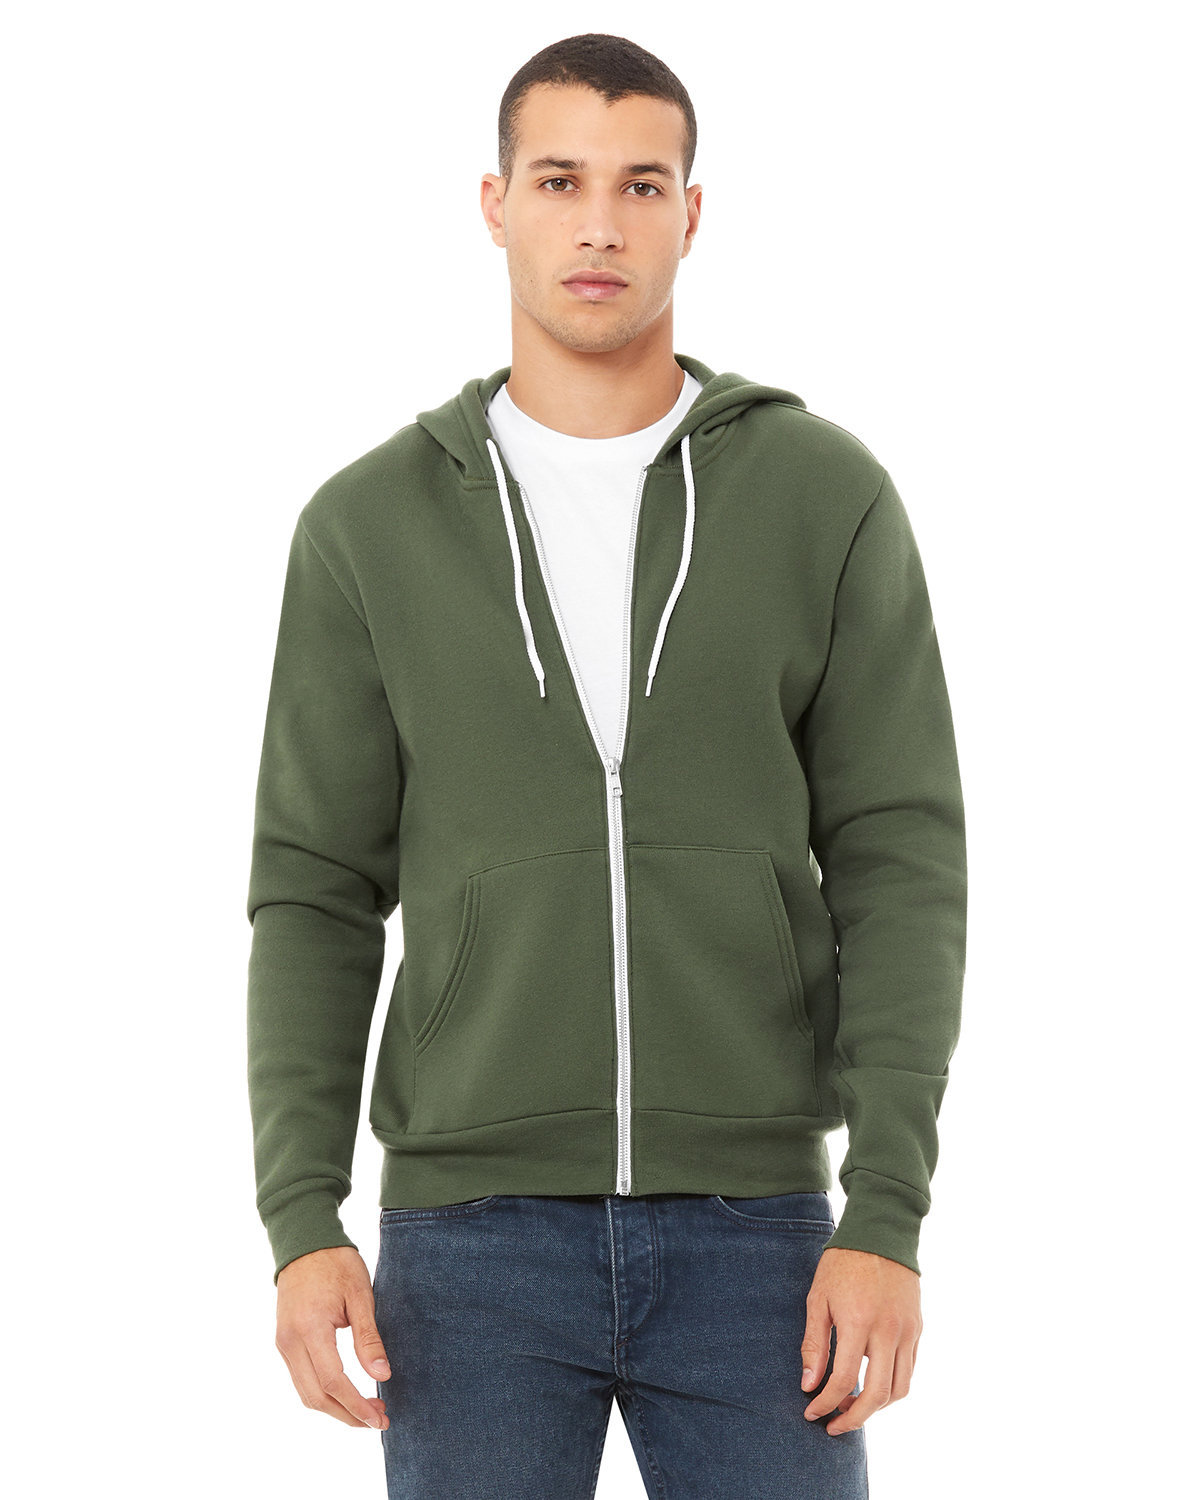 Bella + Canvas Unisex Poly-Cotton Fleece Full-Zip Hooded Sweatshirt MILITARY GREEN 